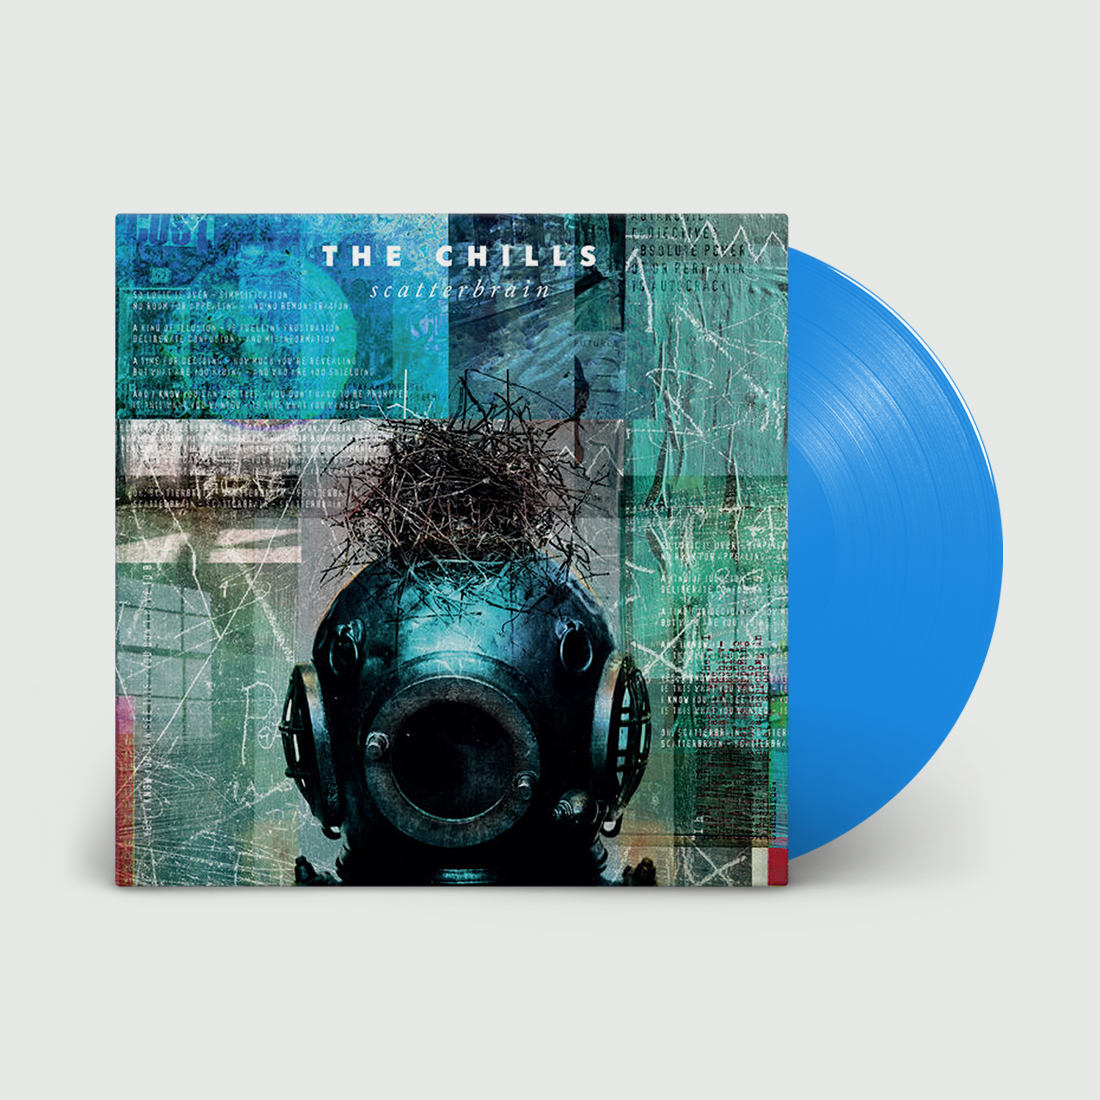 The Chills - Scatterbrain: Sky Blue Vinyl LP